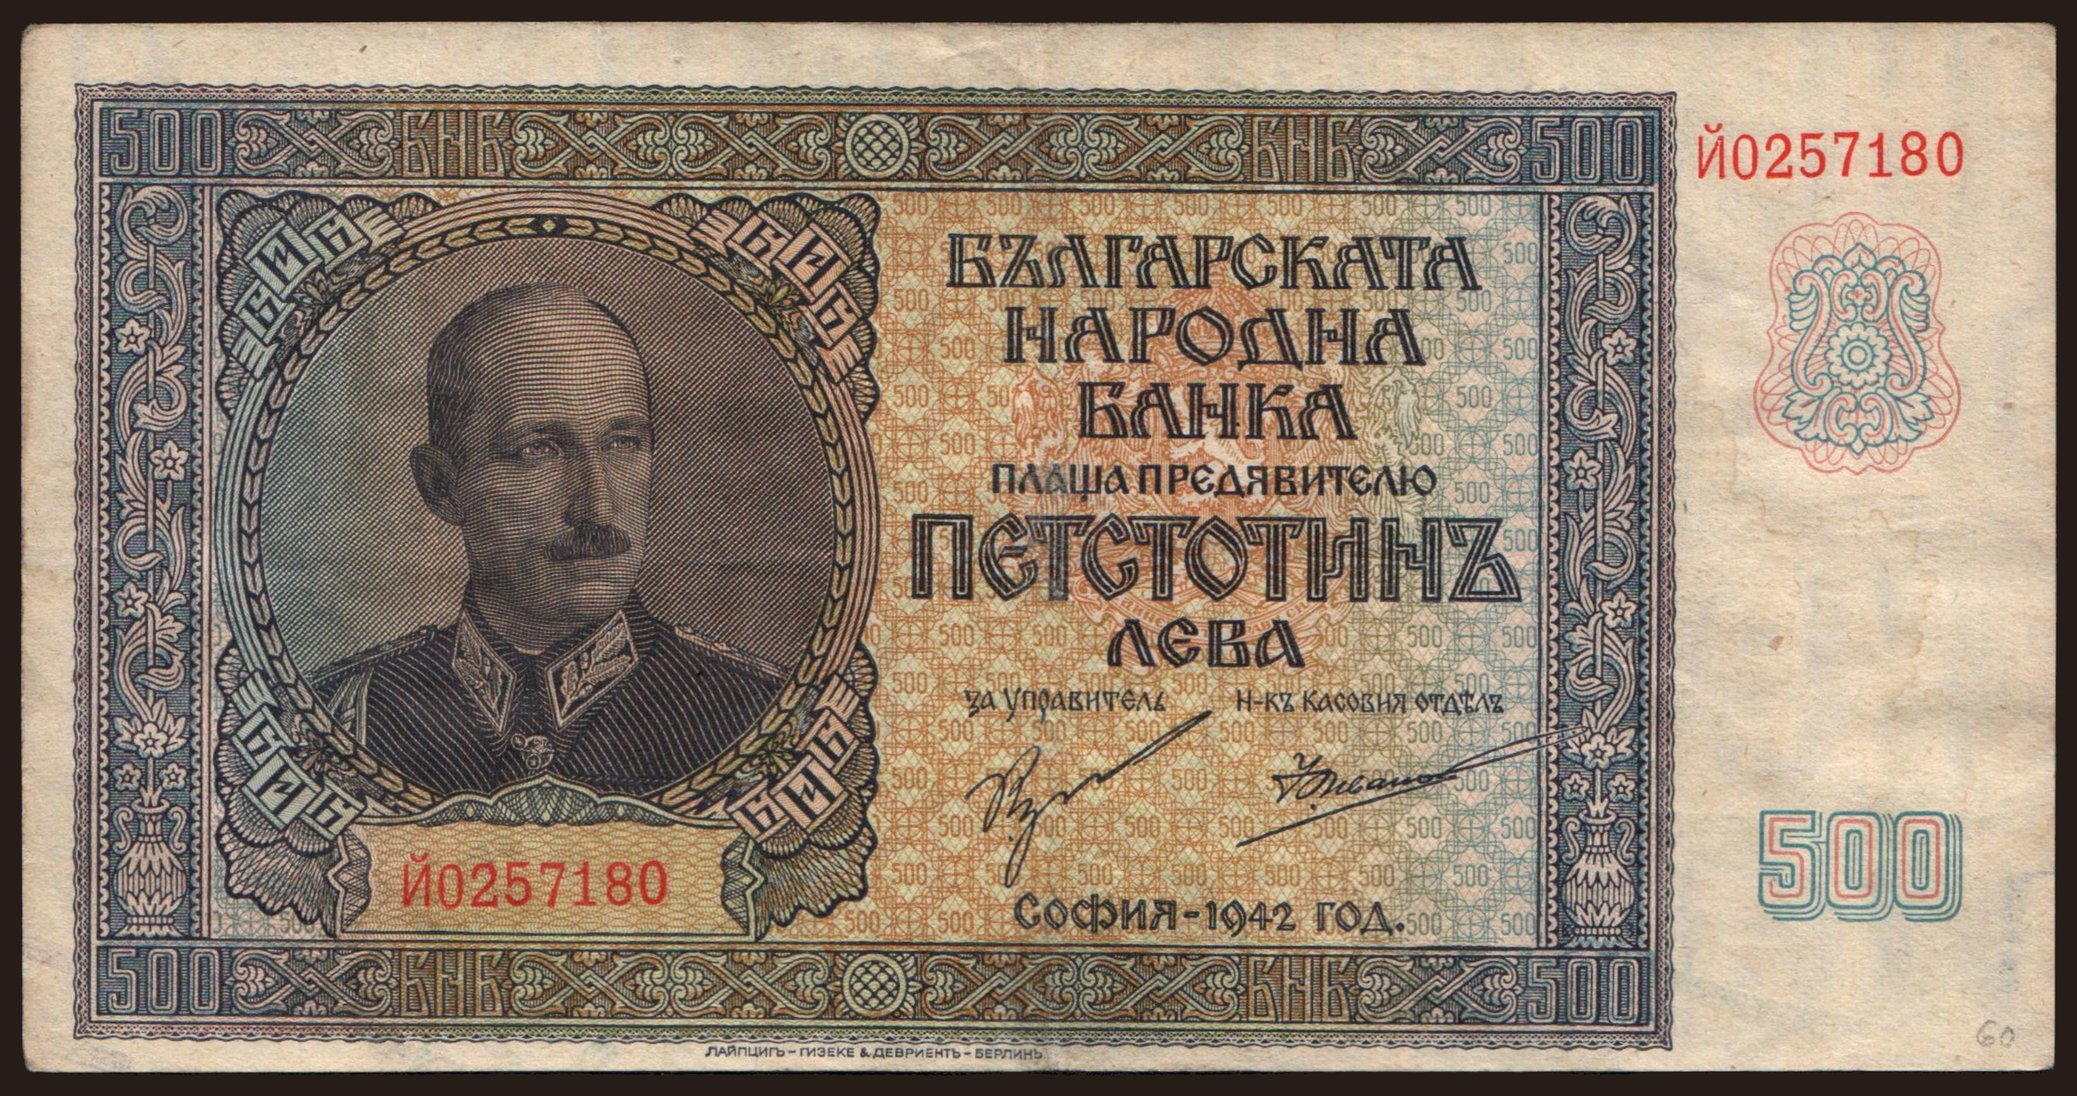 500 leva, 1942